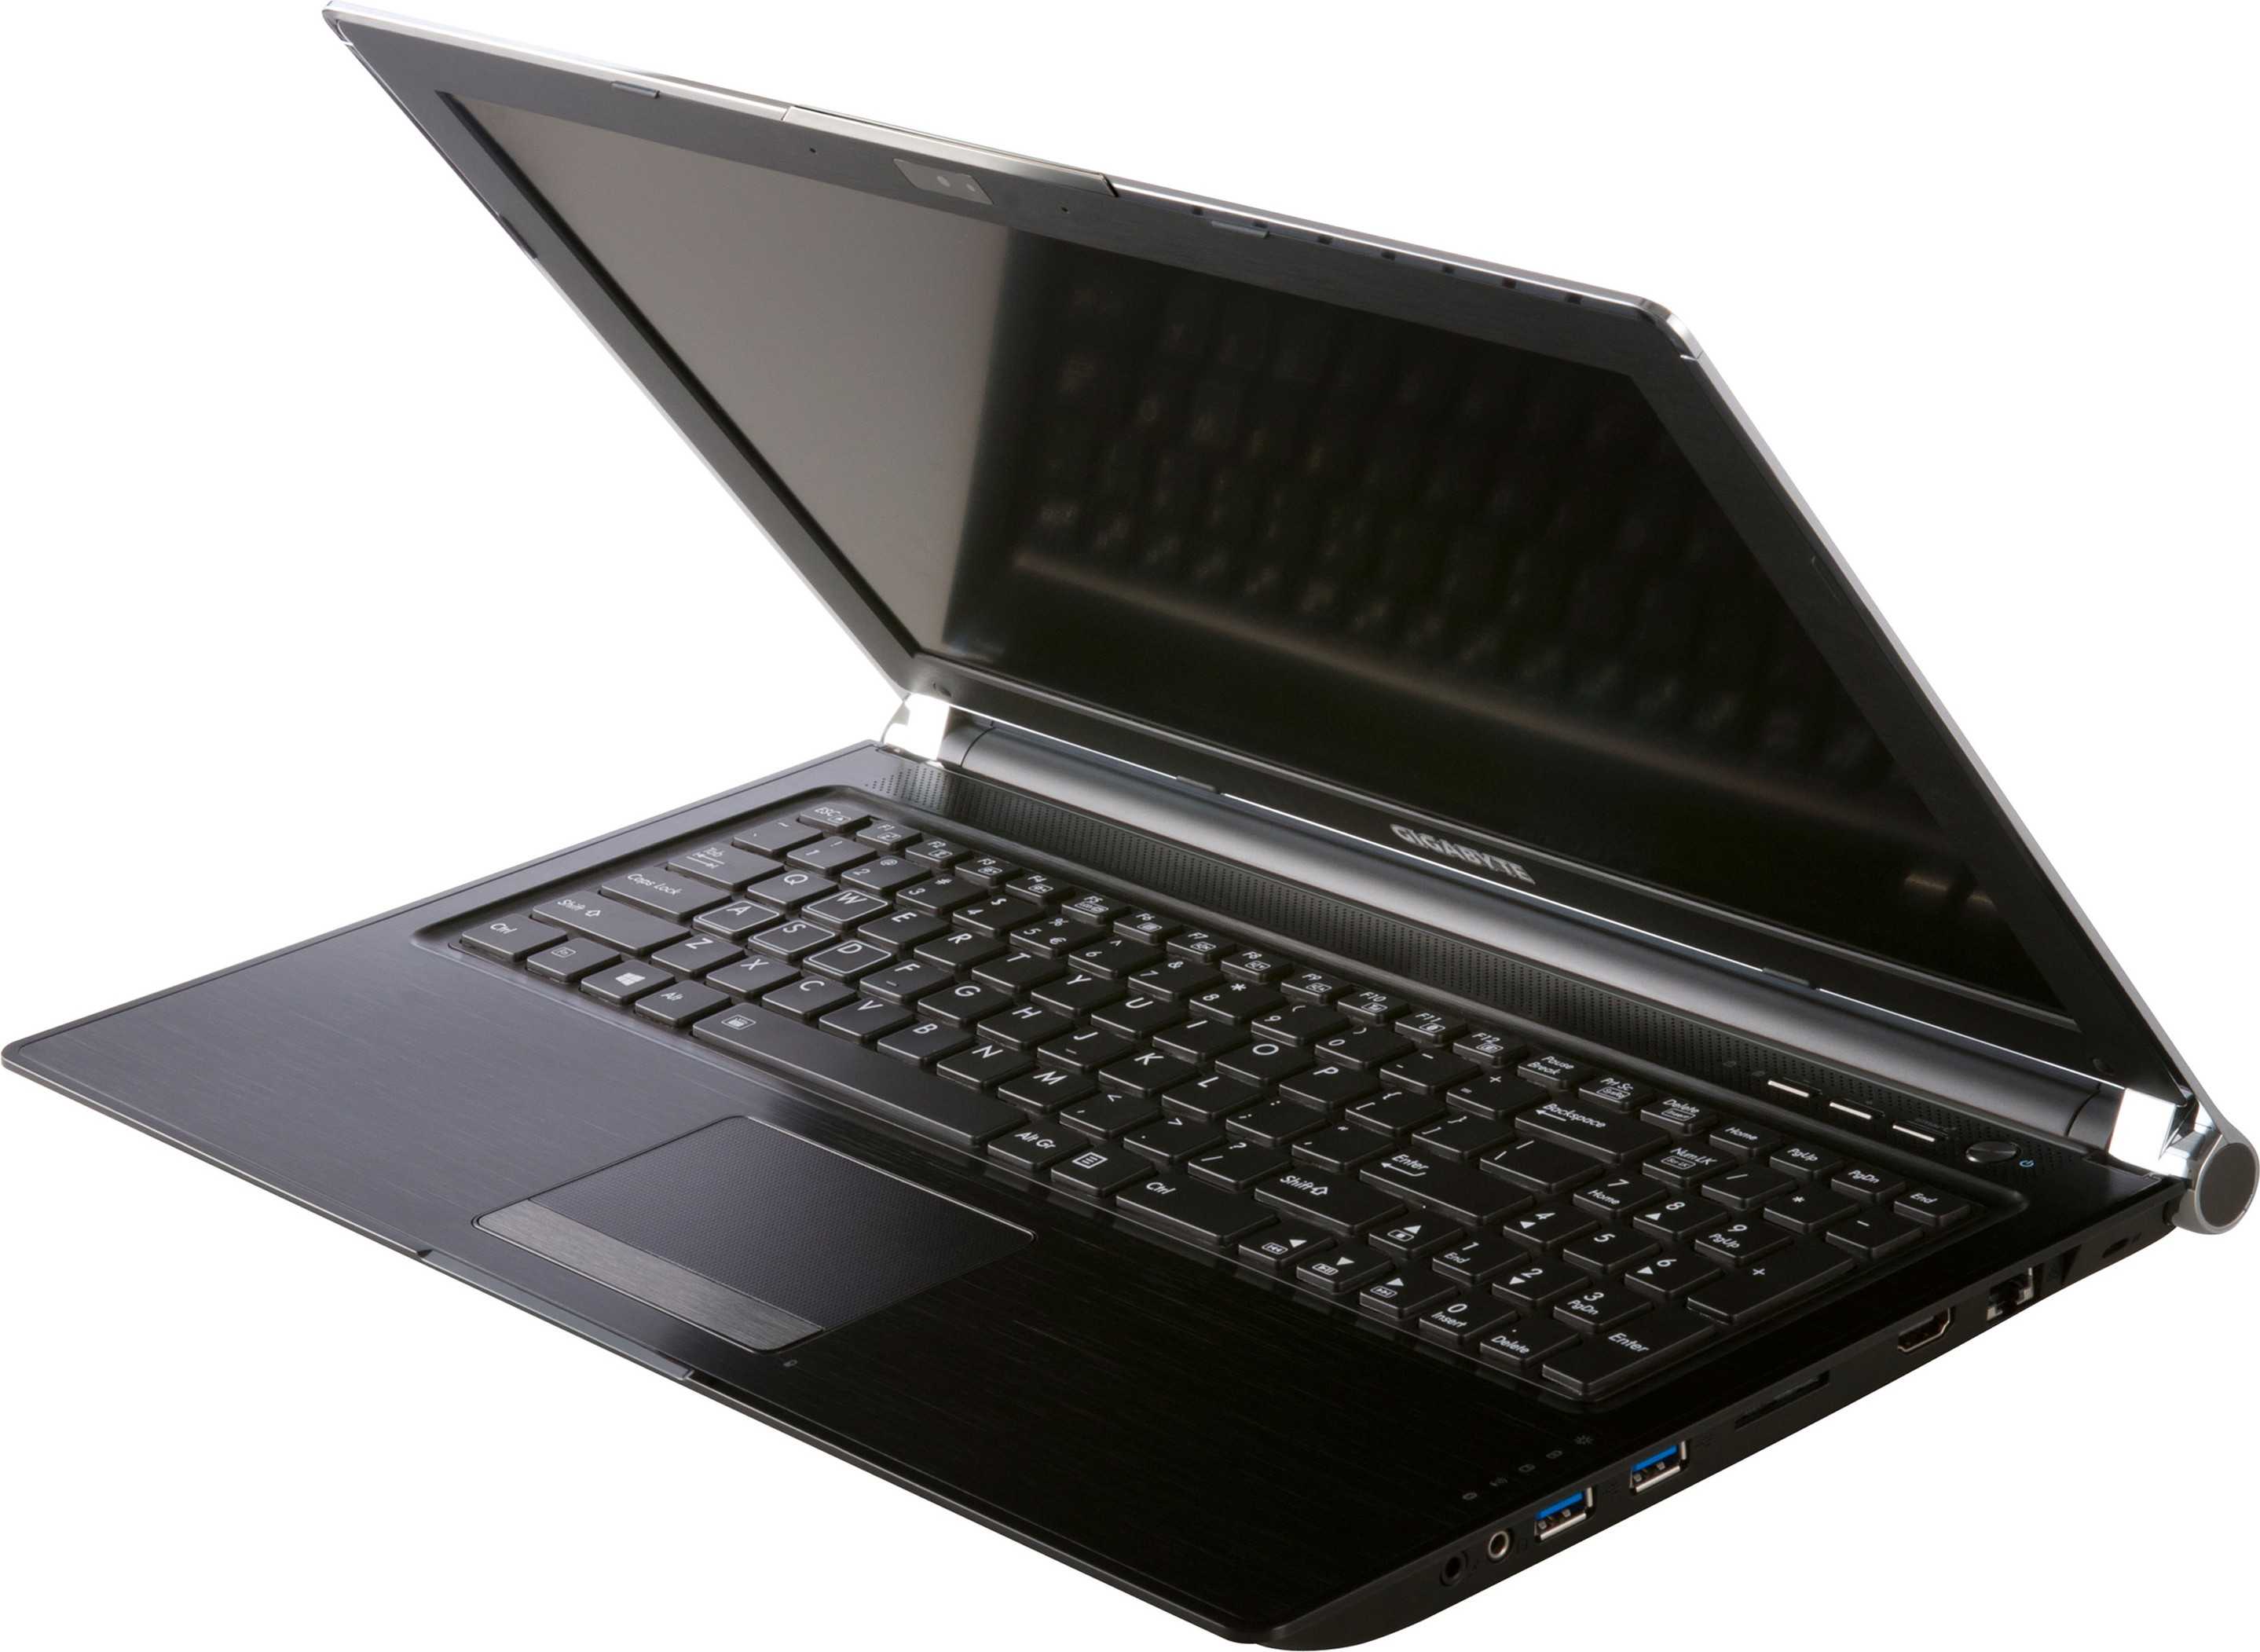 Gigabyte p2532s (9wp2532s0-ua-a-001) ᐈ нужно купить  ноутбук?